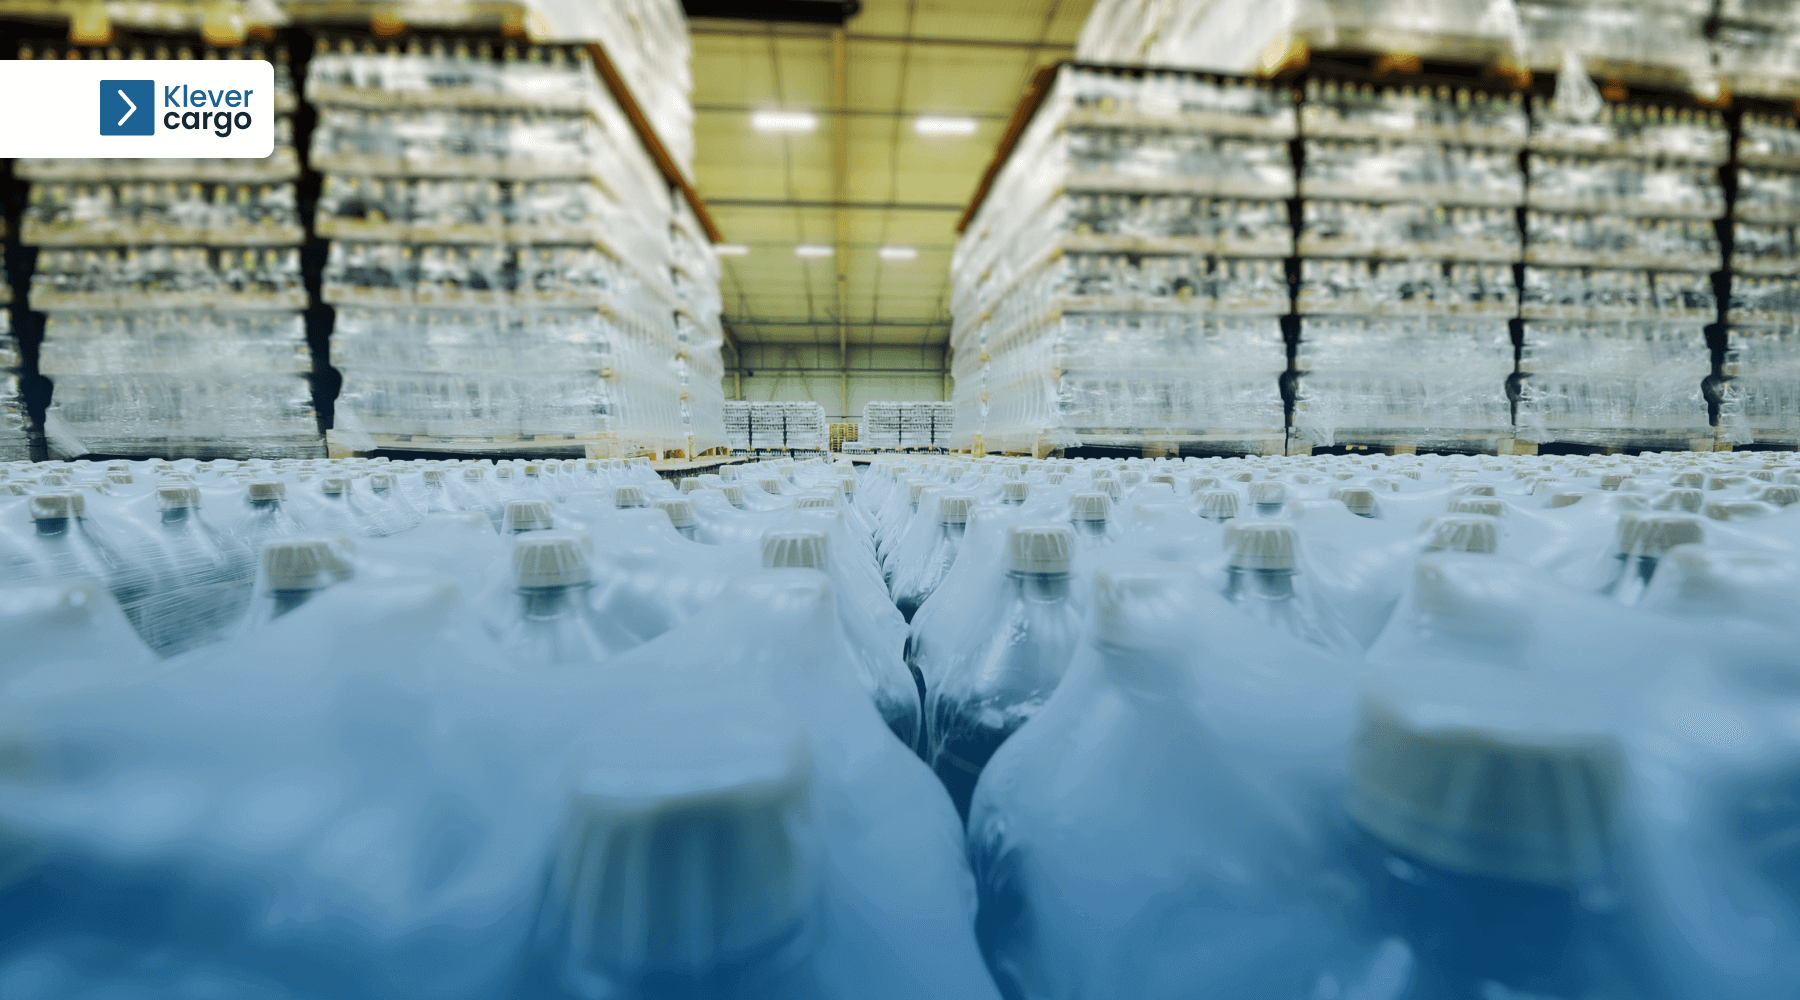 plastic bottles and warehousing